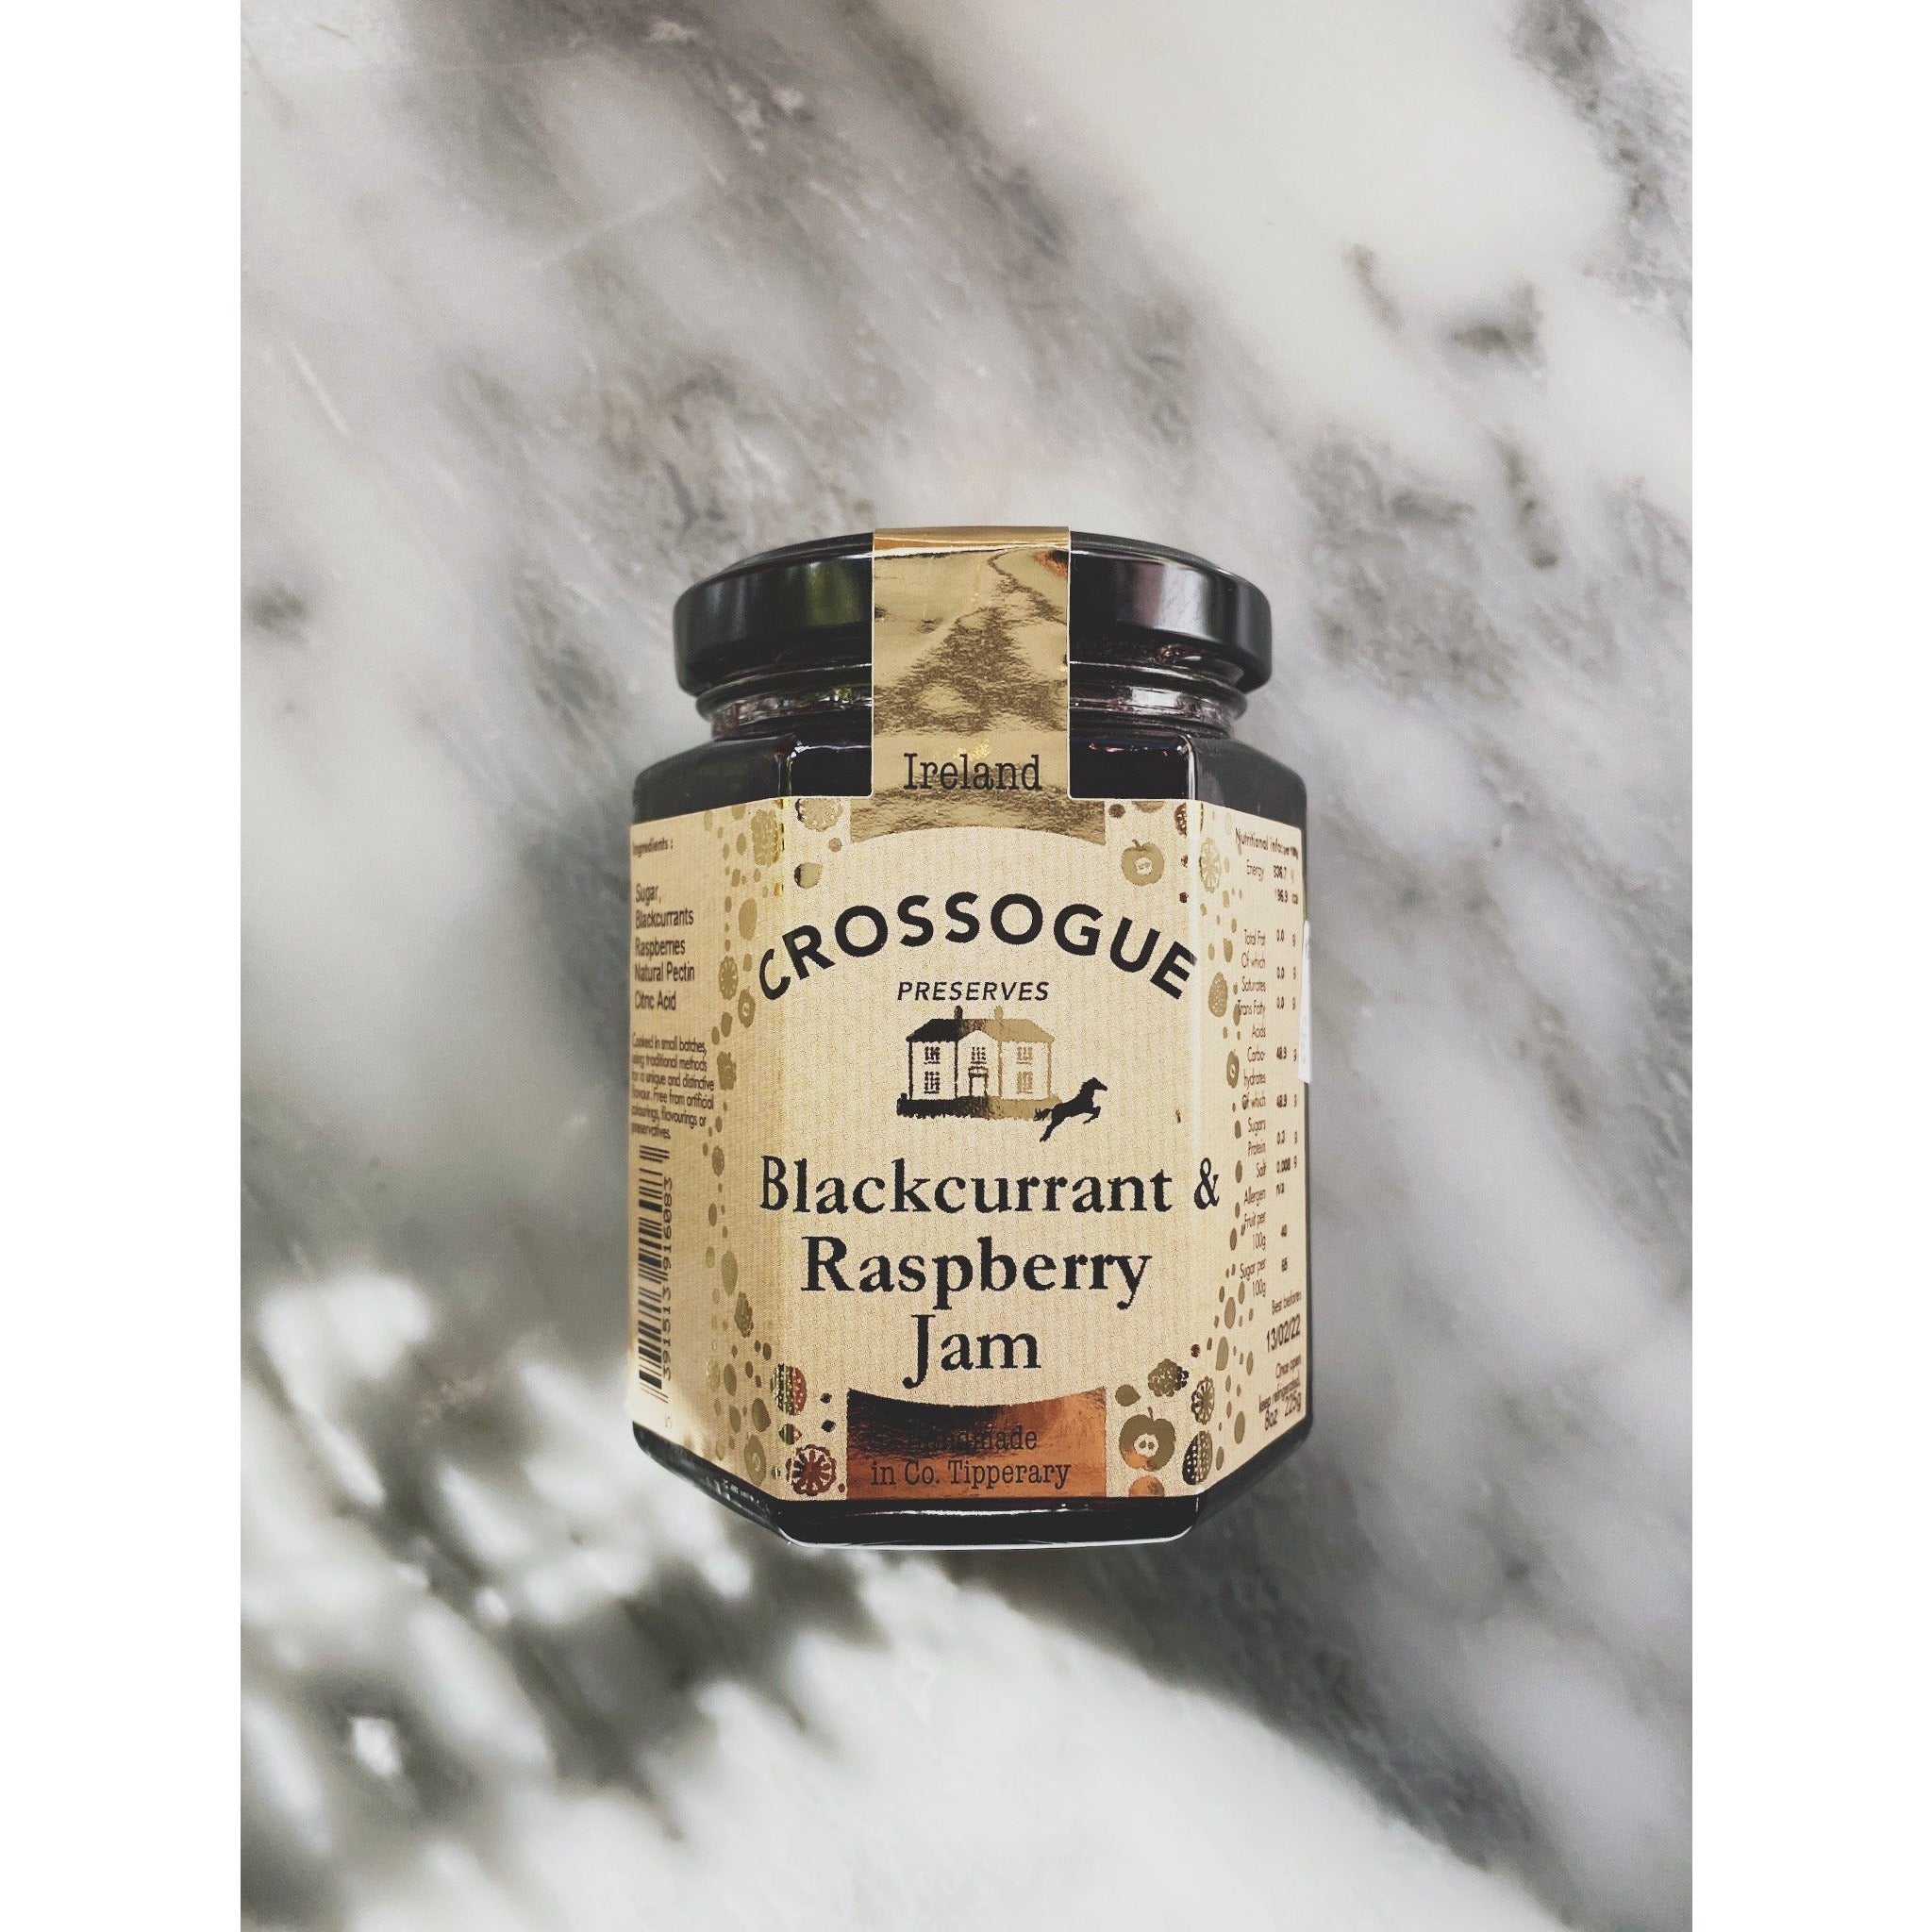 Crossogue Preserves - Blackcurrant Raspberry Jam - Kate's Kitchen